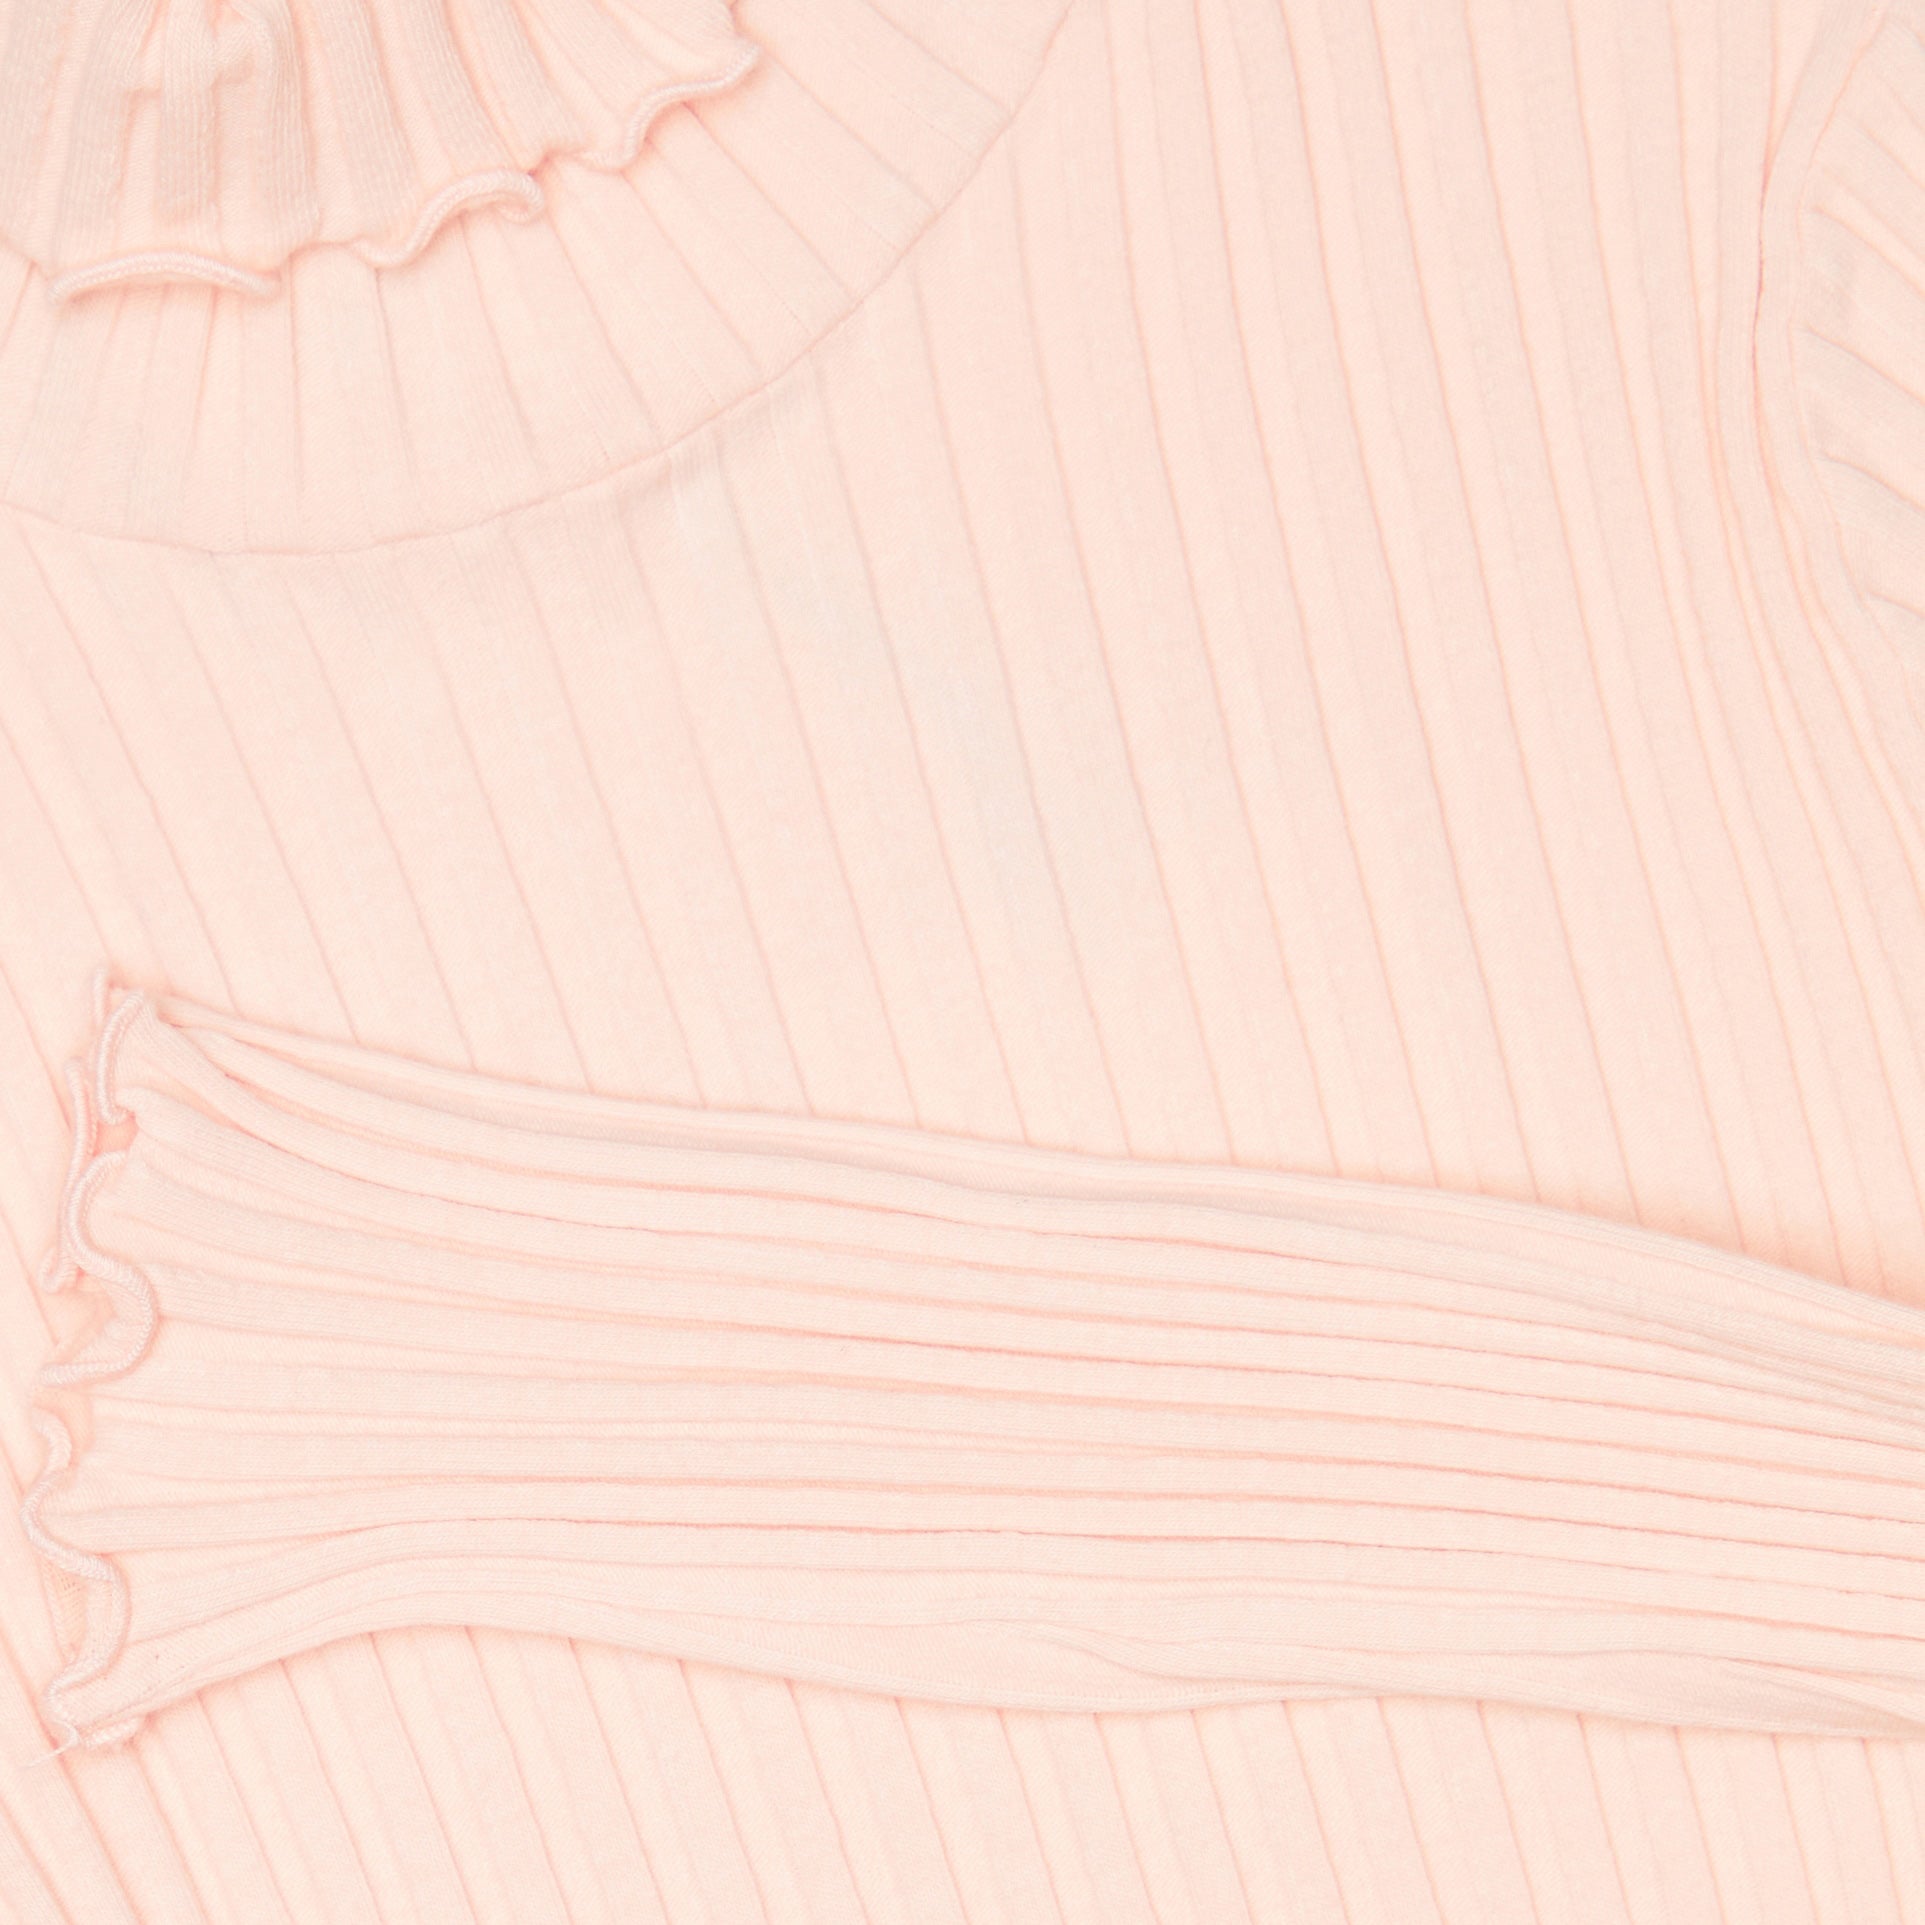 Girls Pink Cotton Sweater